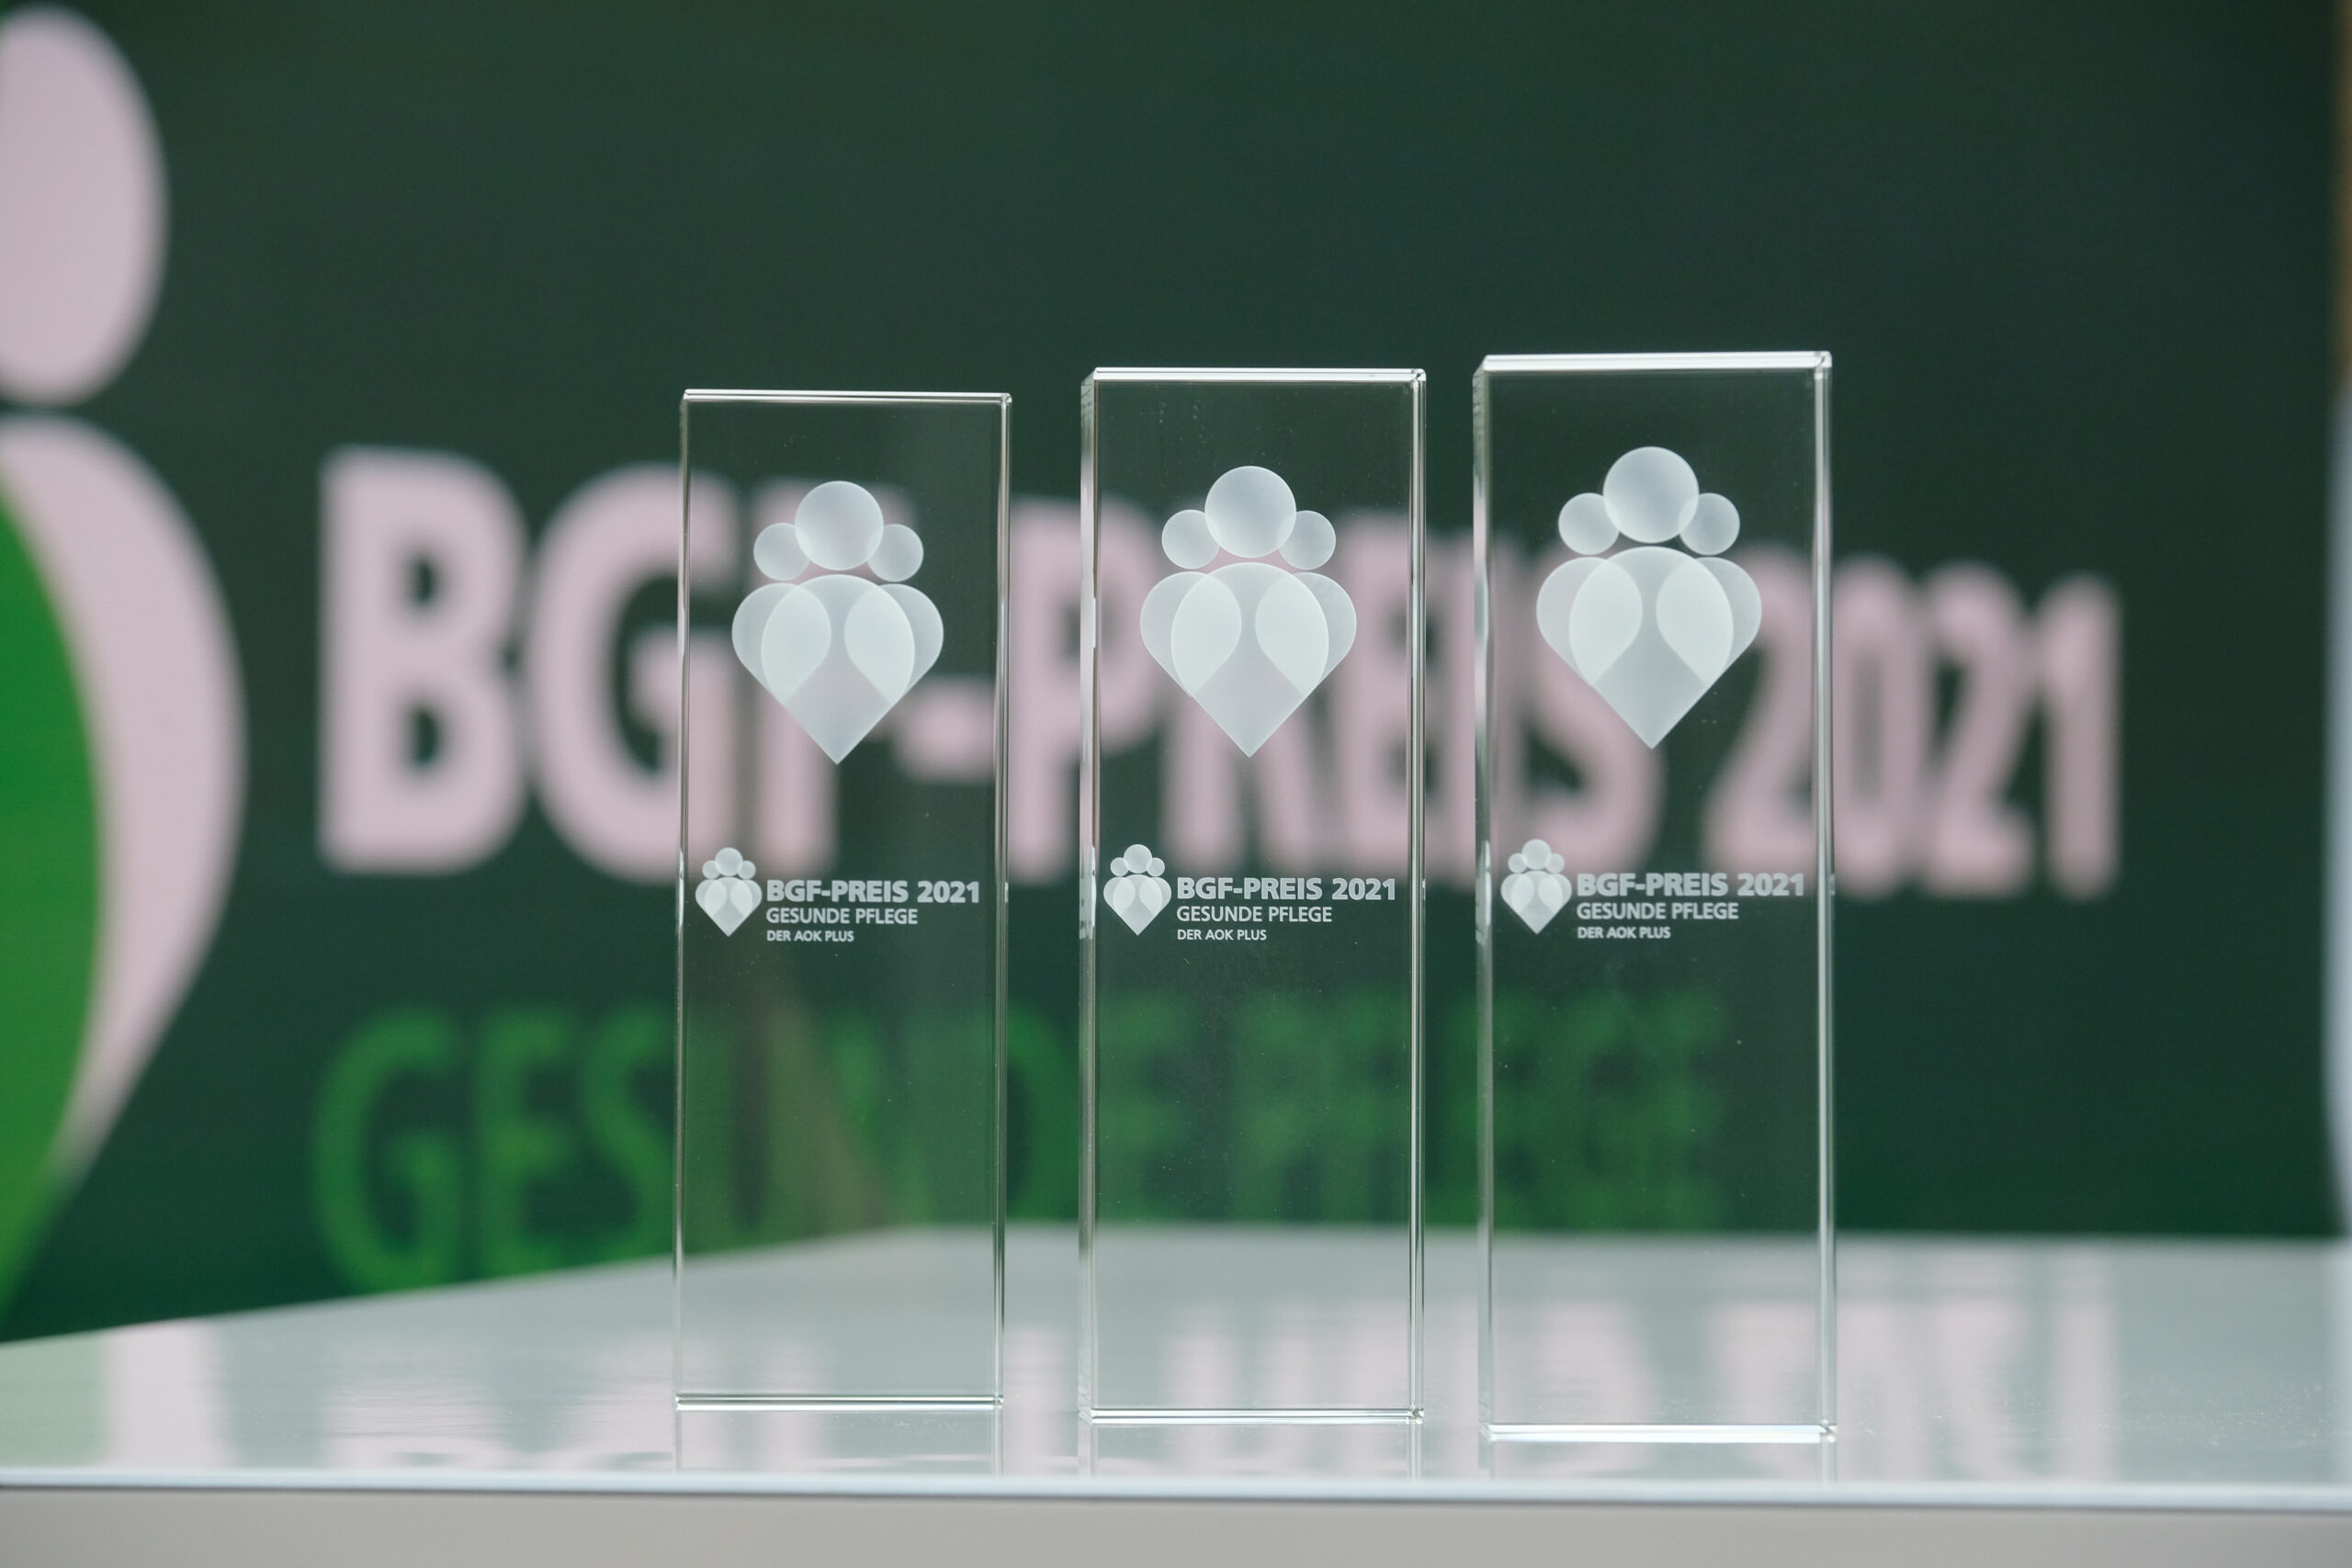 Gewinner des BGF-Preises 2021